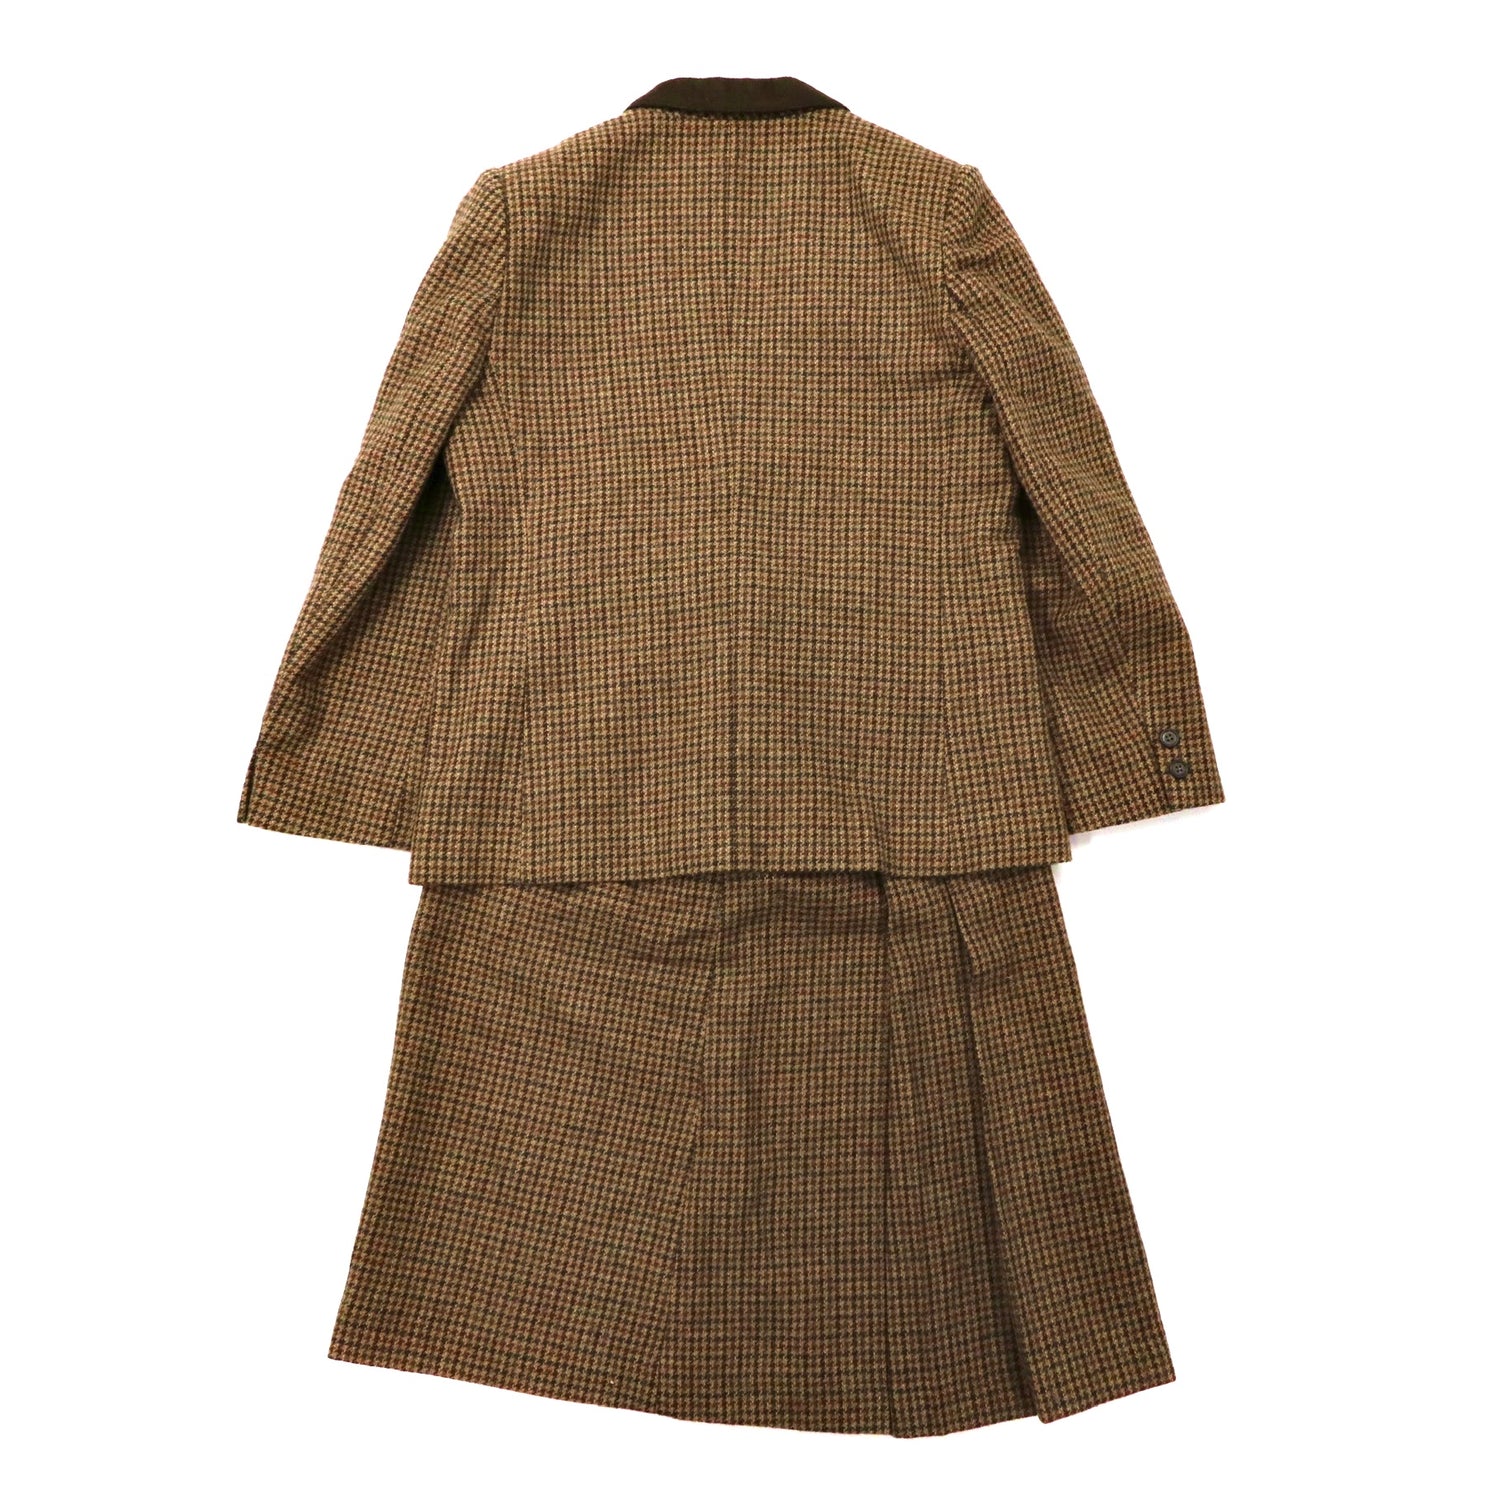 CARRYMARSH Tweed Jacket Retro Setup Suit 9AB2 Brown